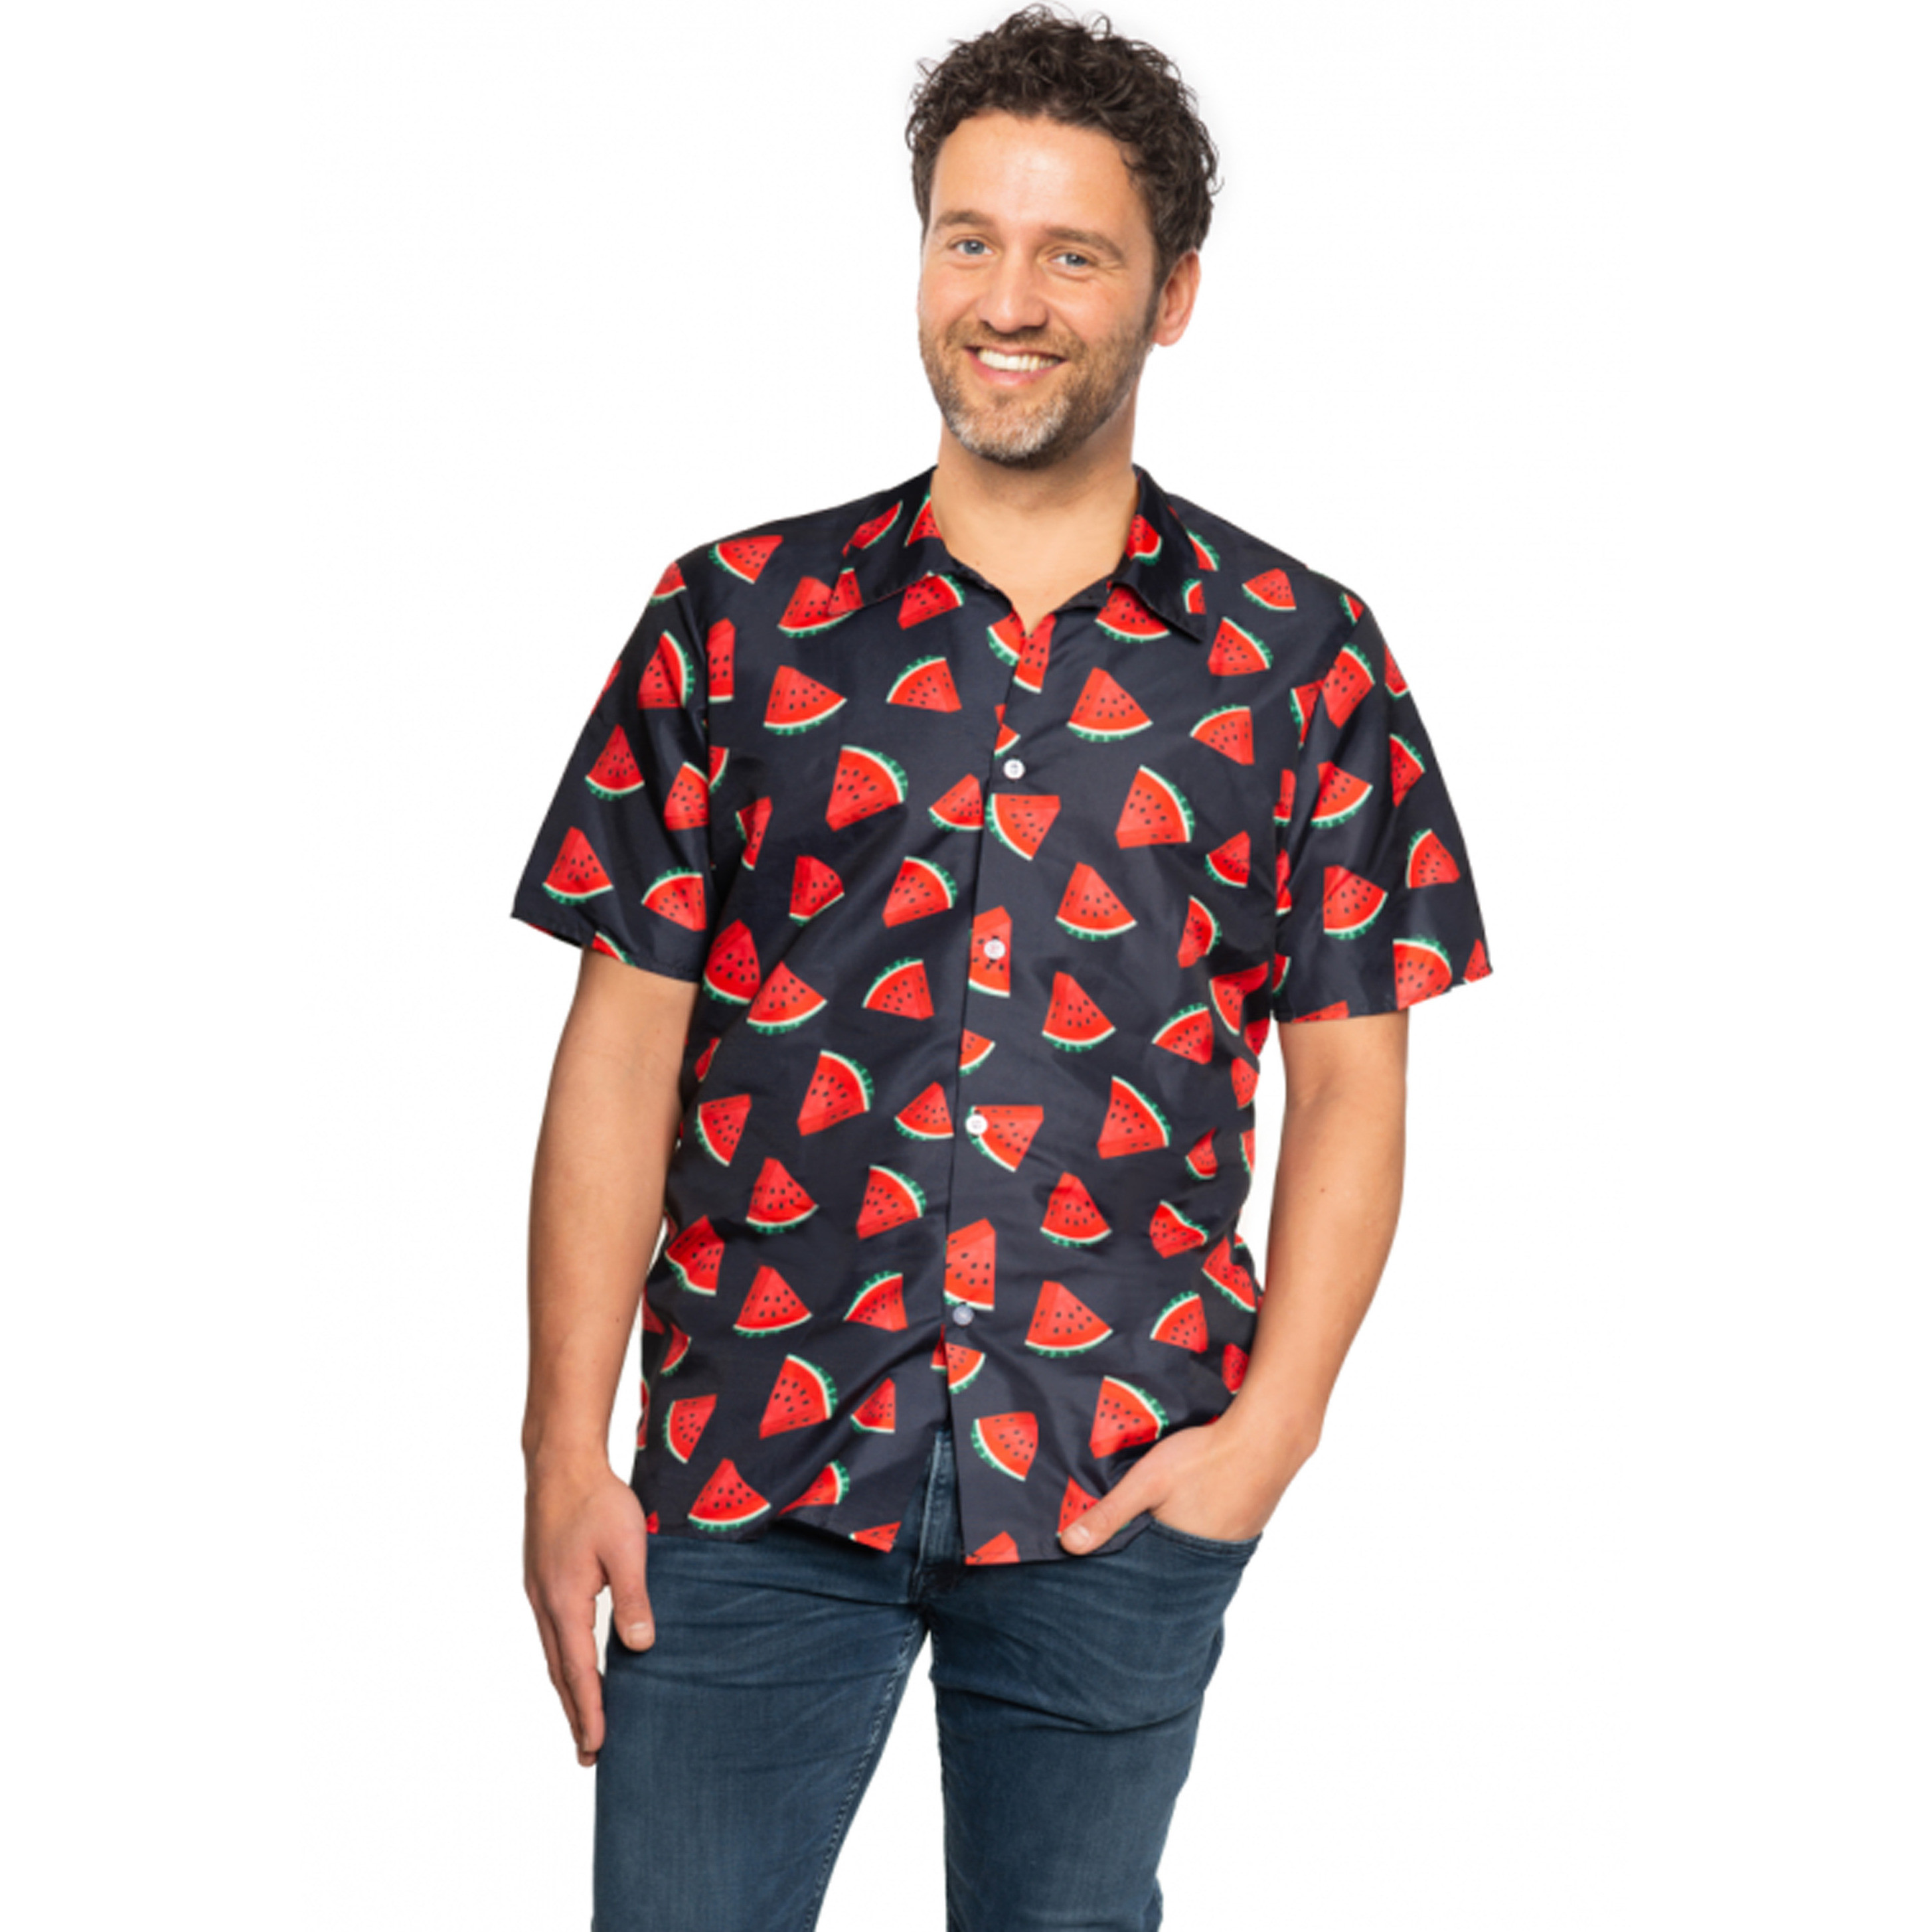 Toppers - Tropical party Hawaii blouse heren - watermeloen - zwart - carnaval/themafeest - plus size